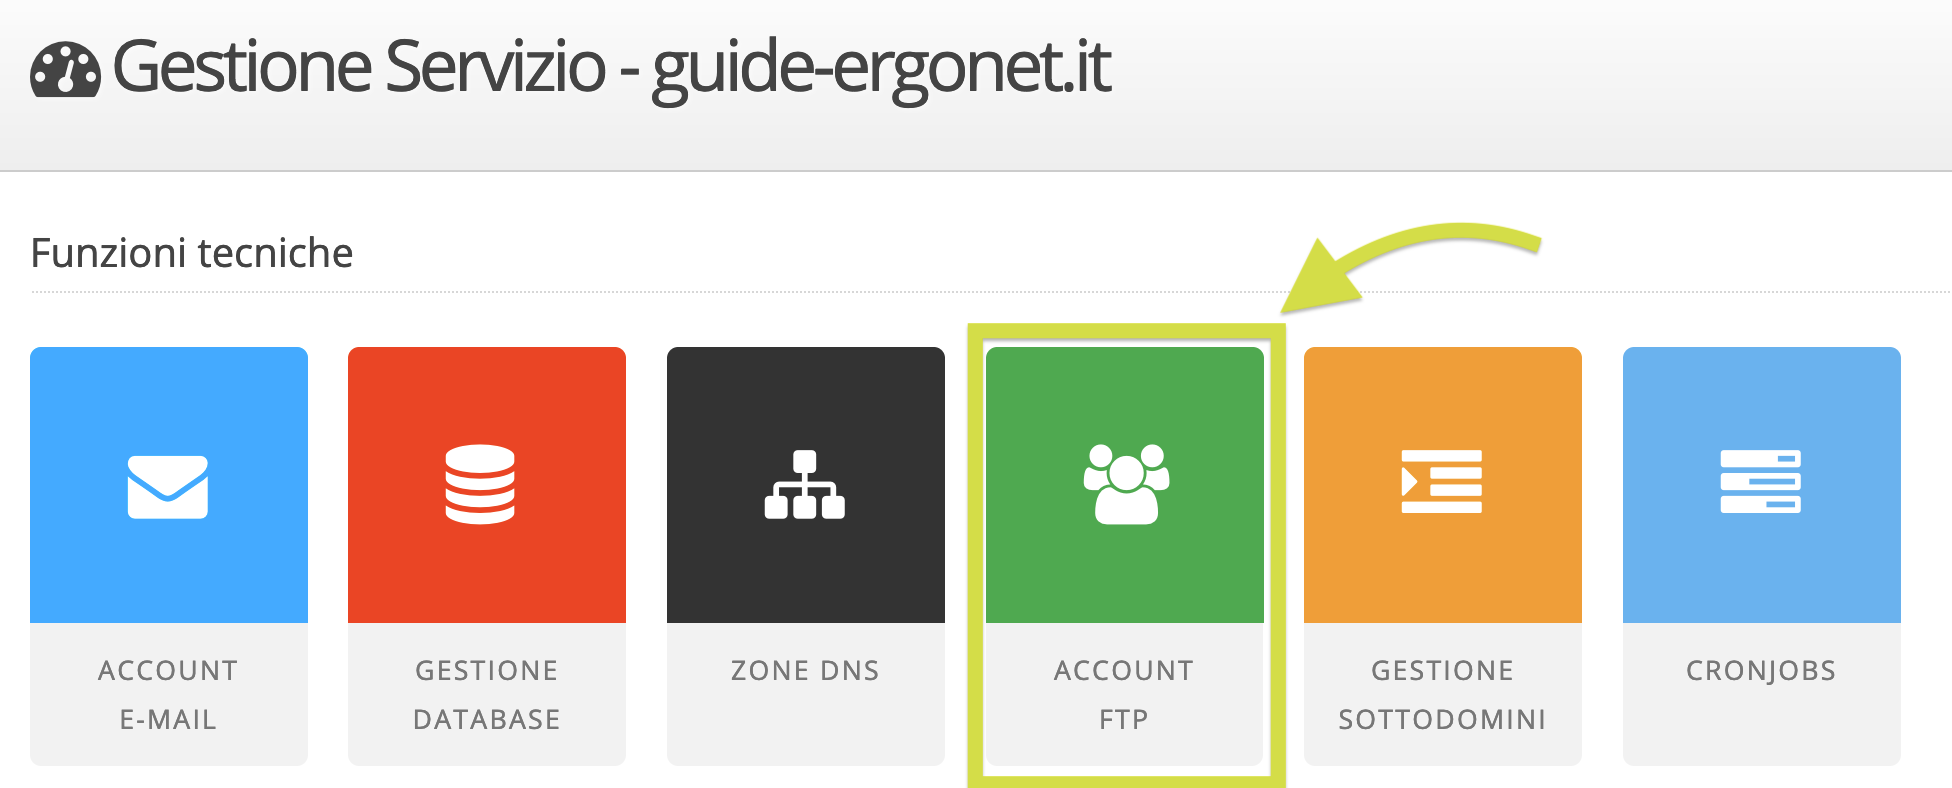 WebPanel Ergonet - Gestione account FTP